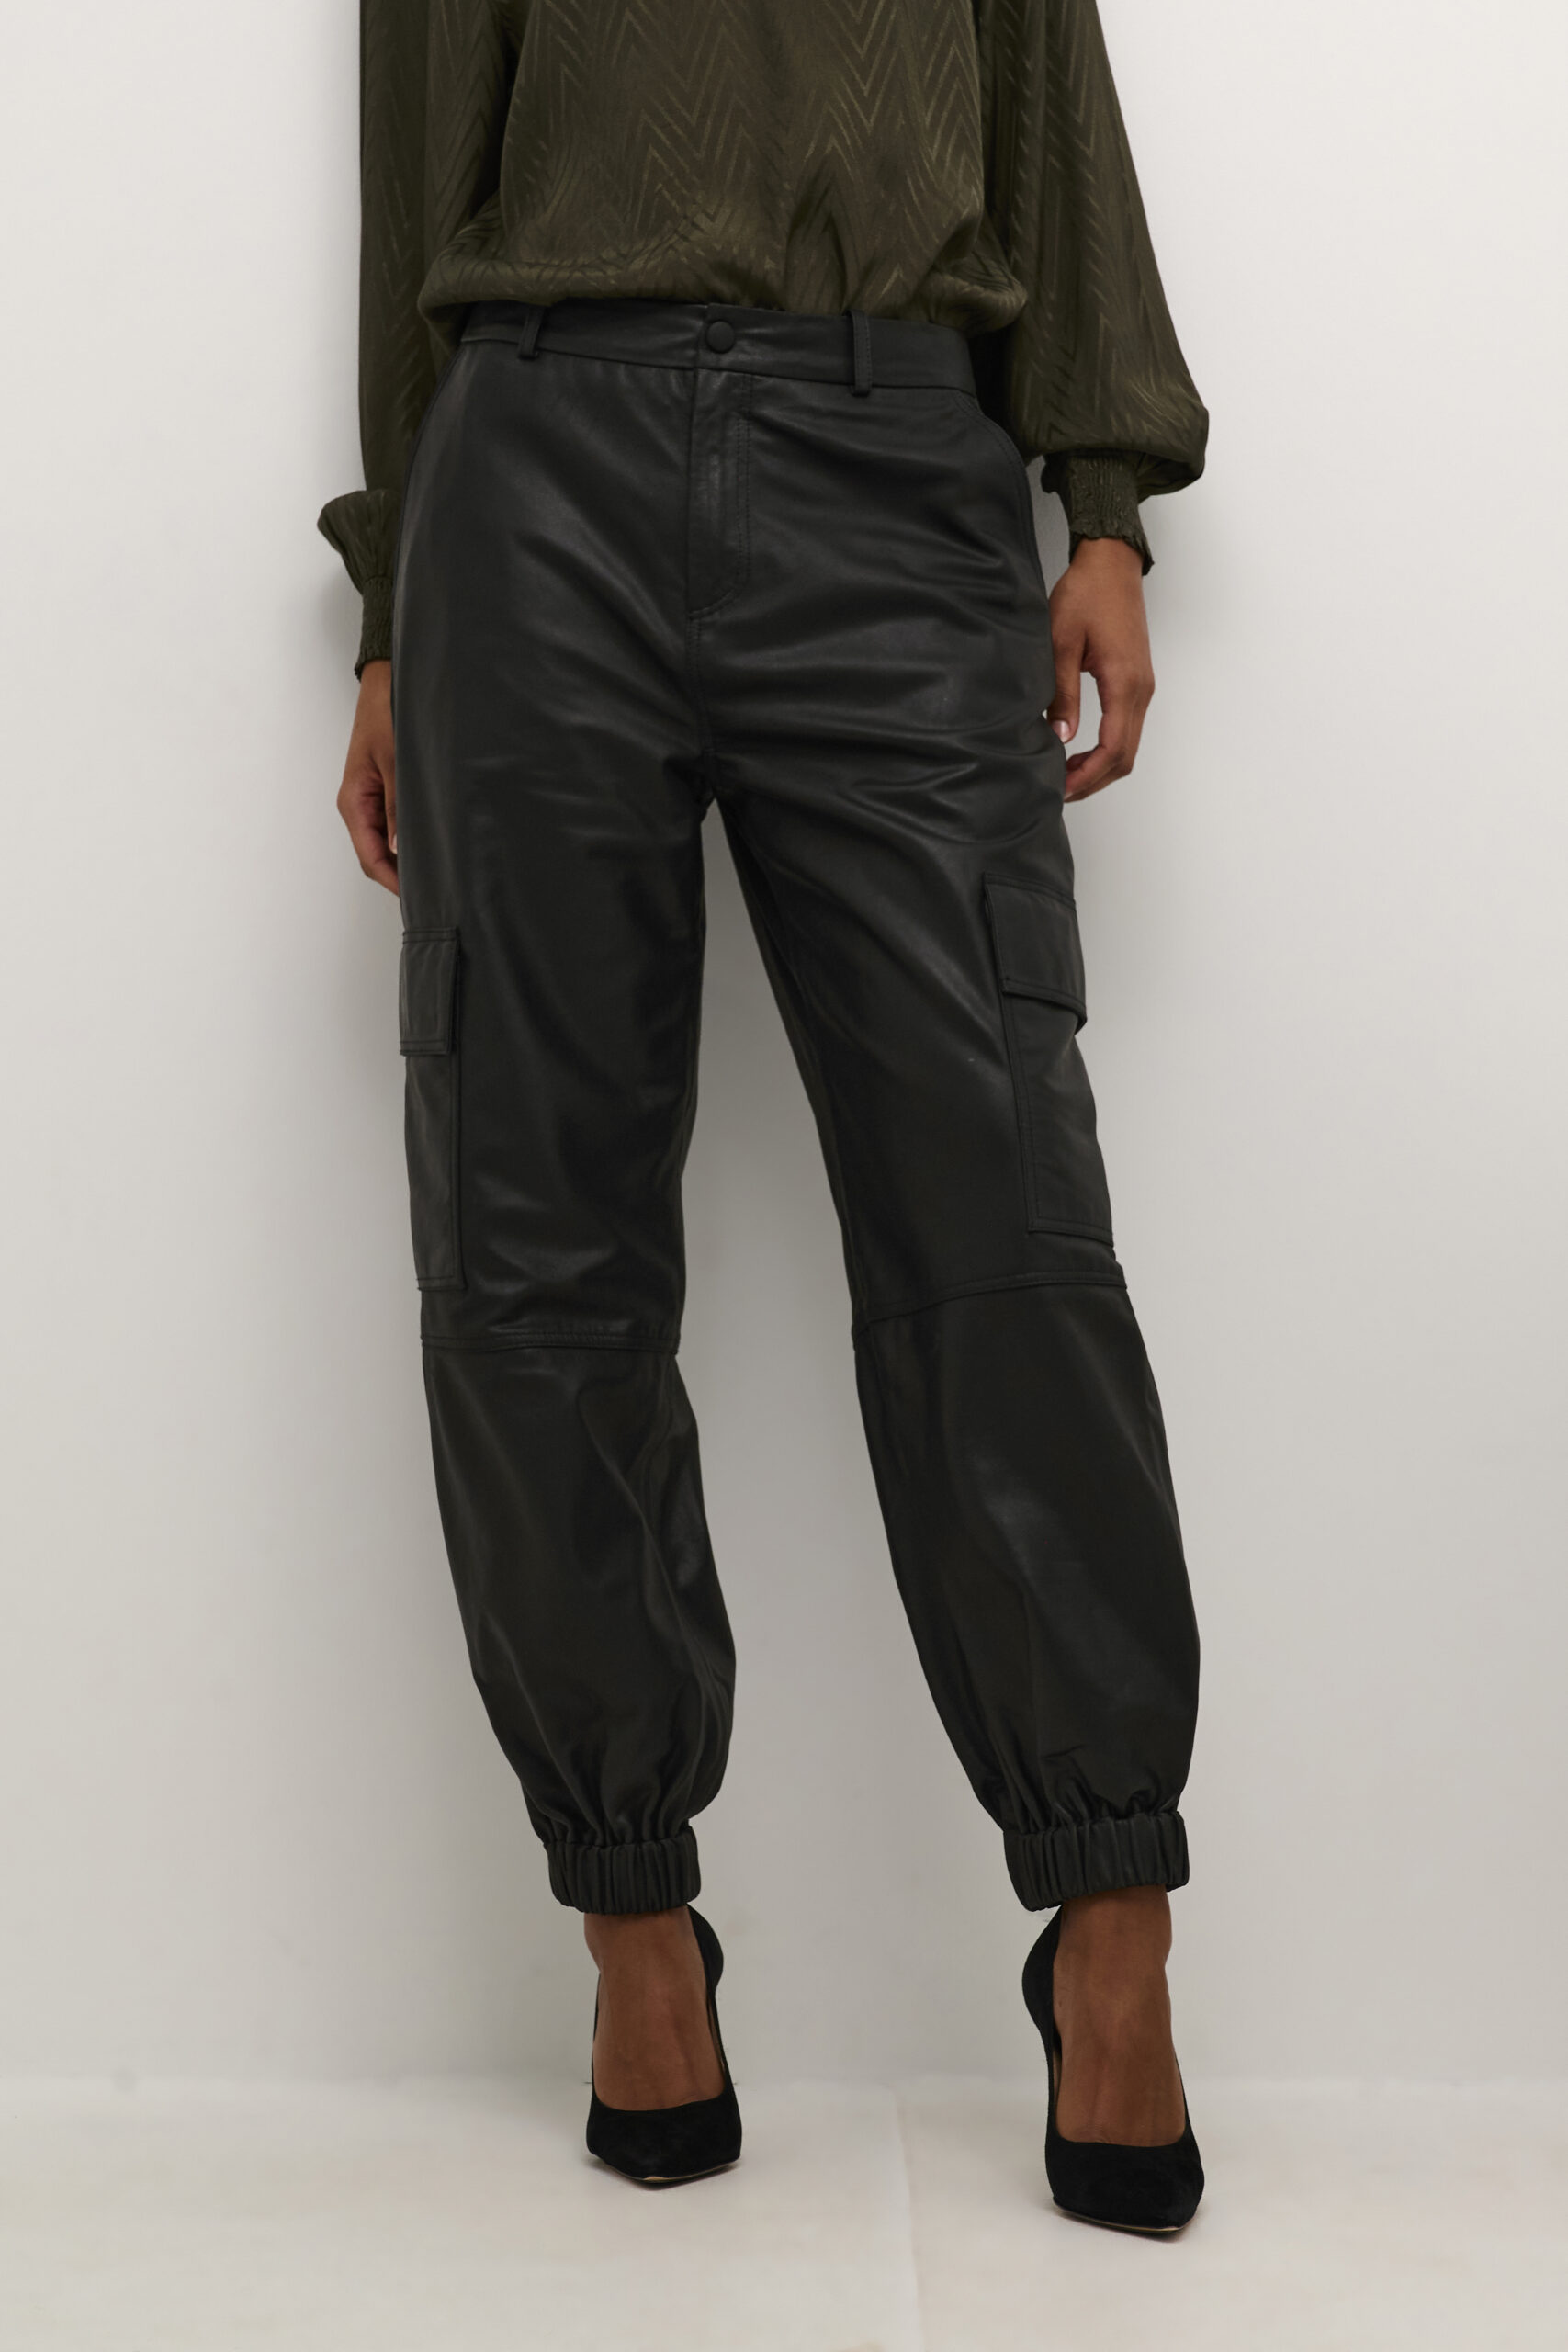 KAmalene Leather Pants front